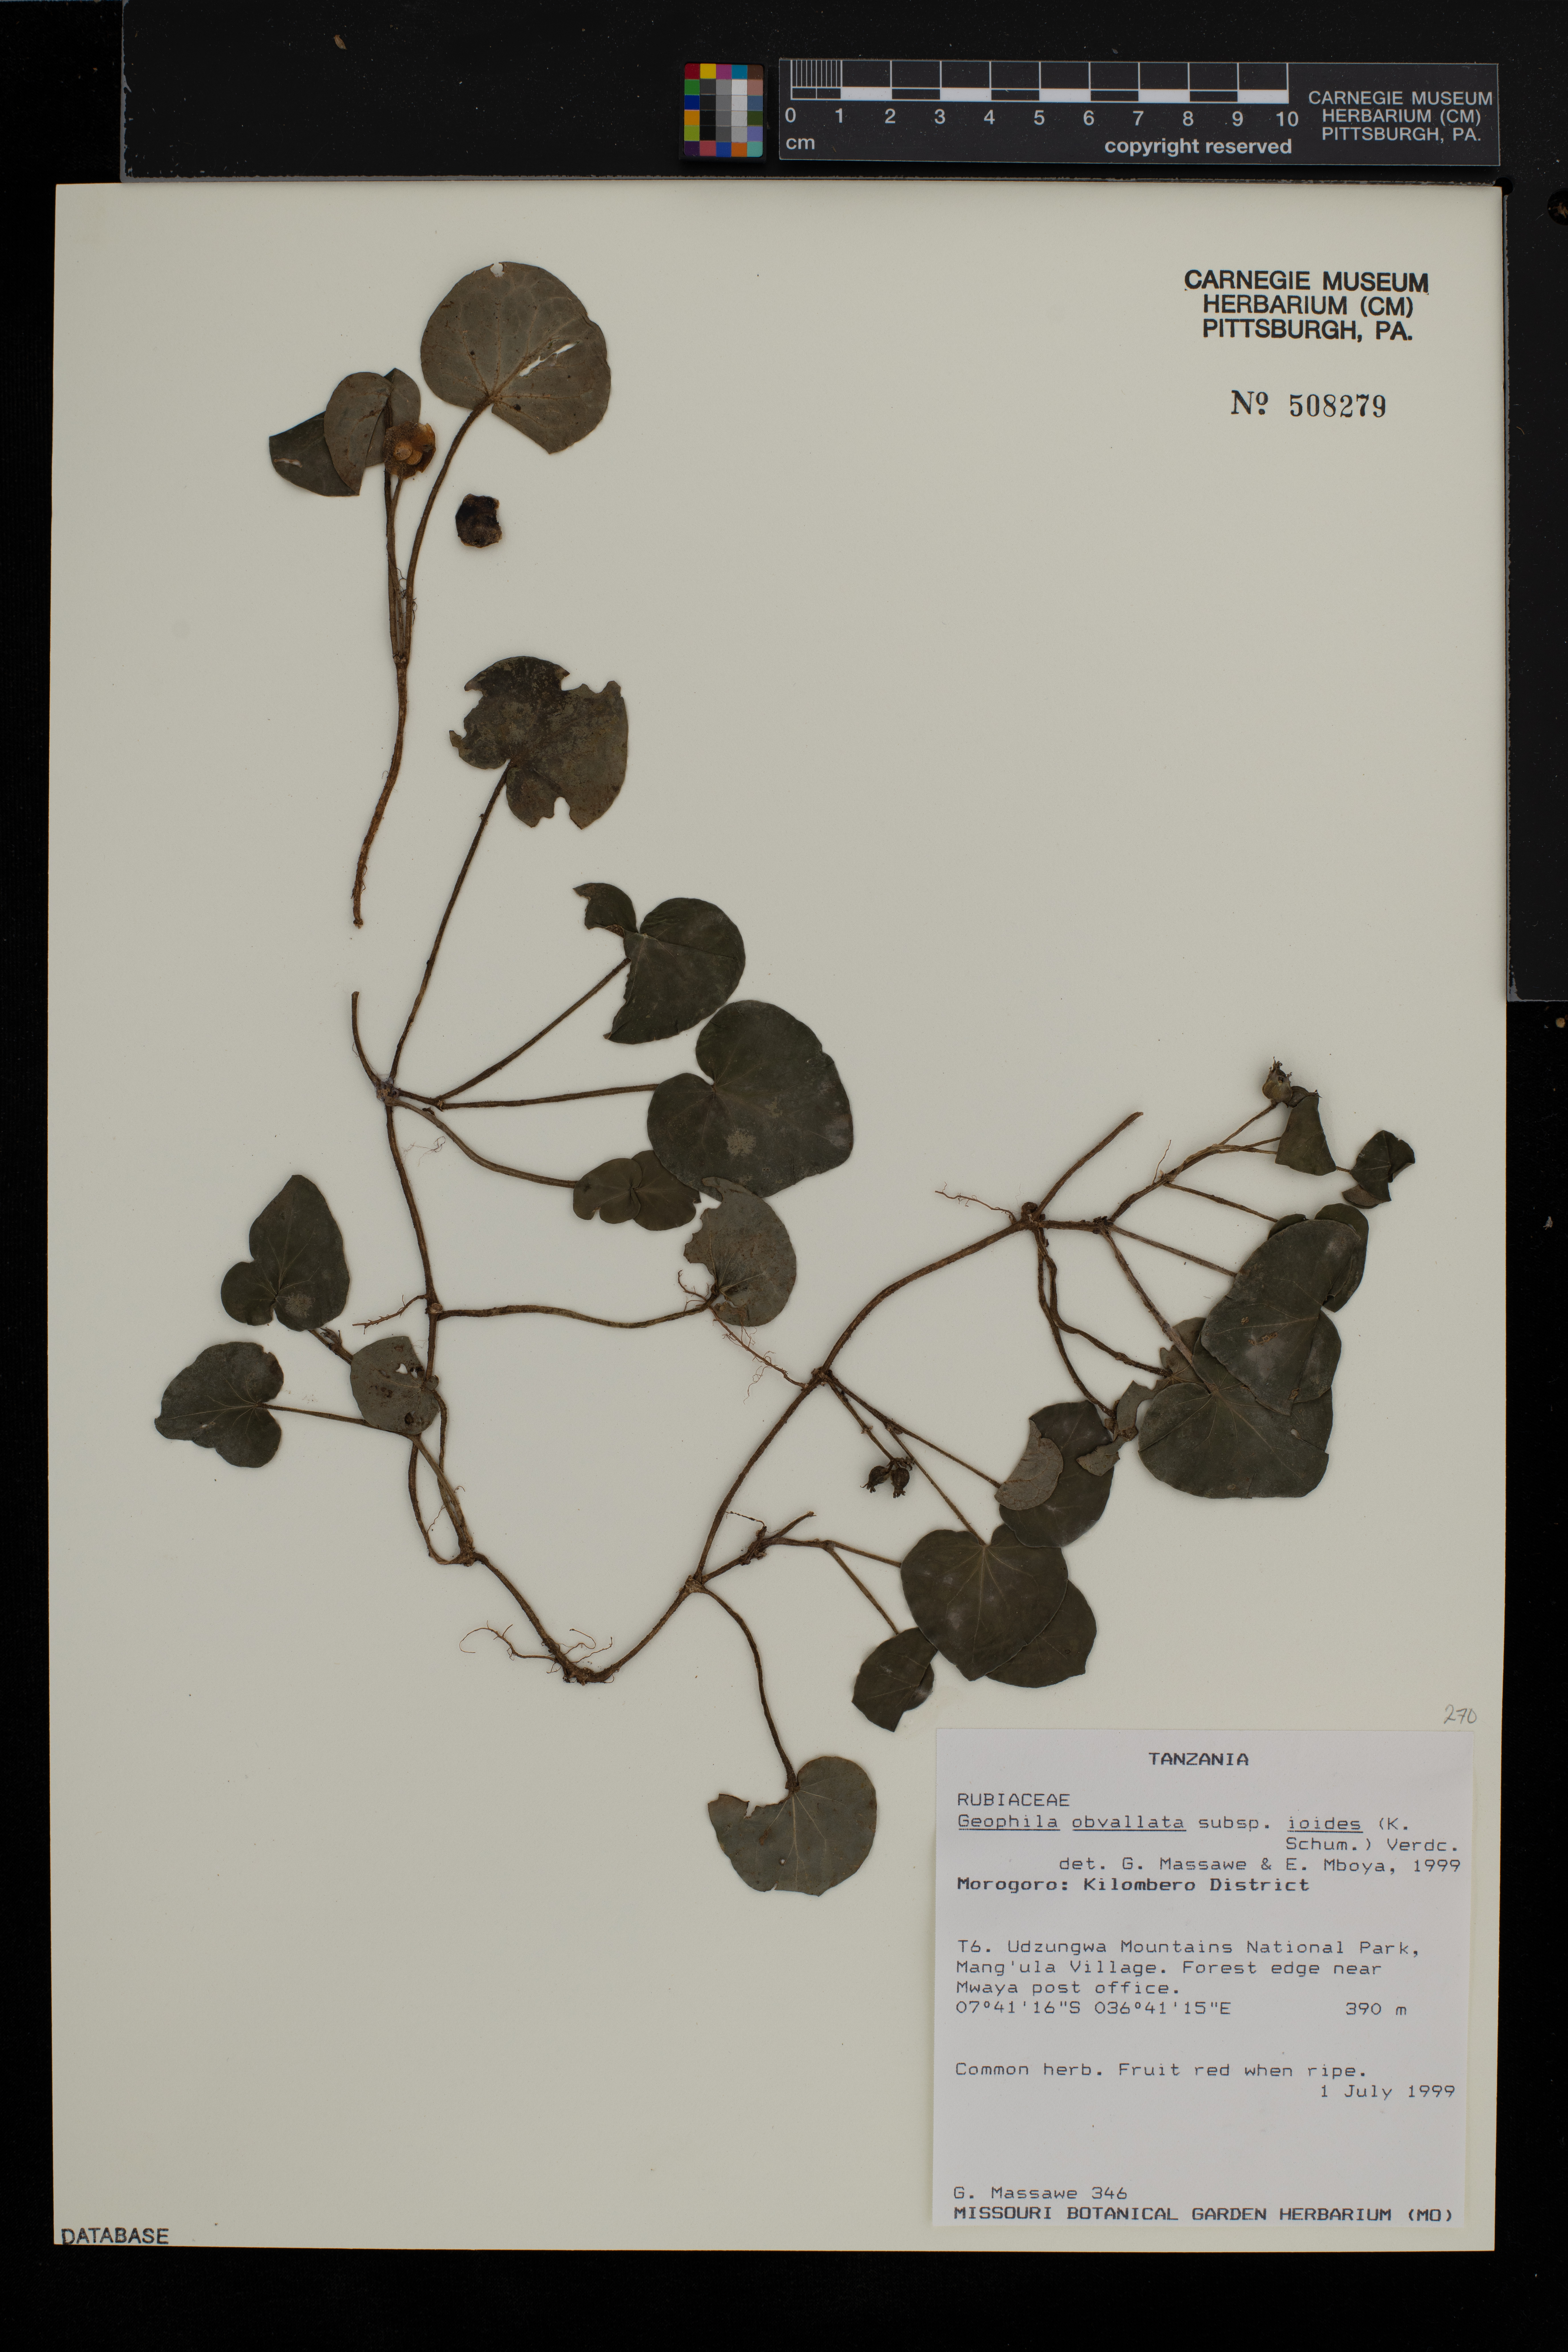 Geophila obvallata subsp. ioides image